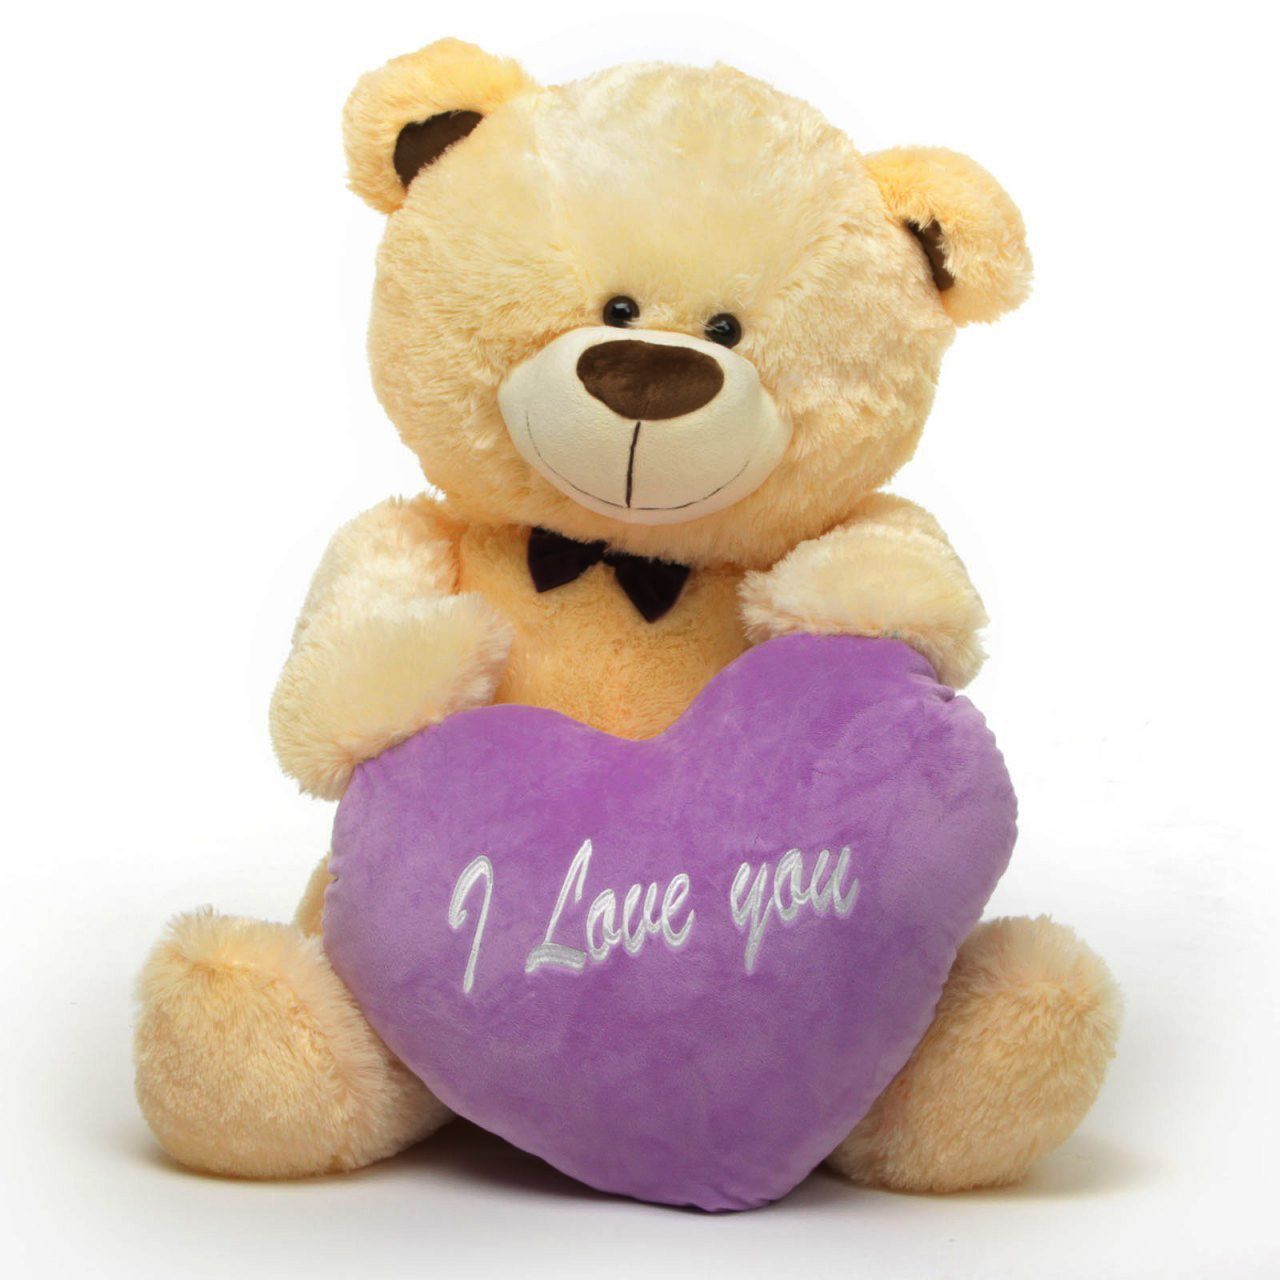 Love You Teddy Bear - 1280x1280 Wallpaper 